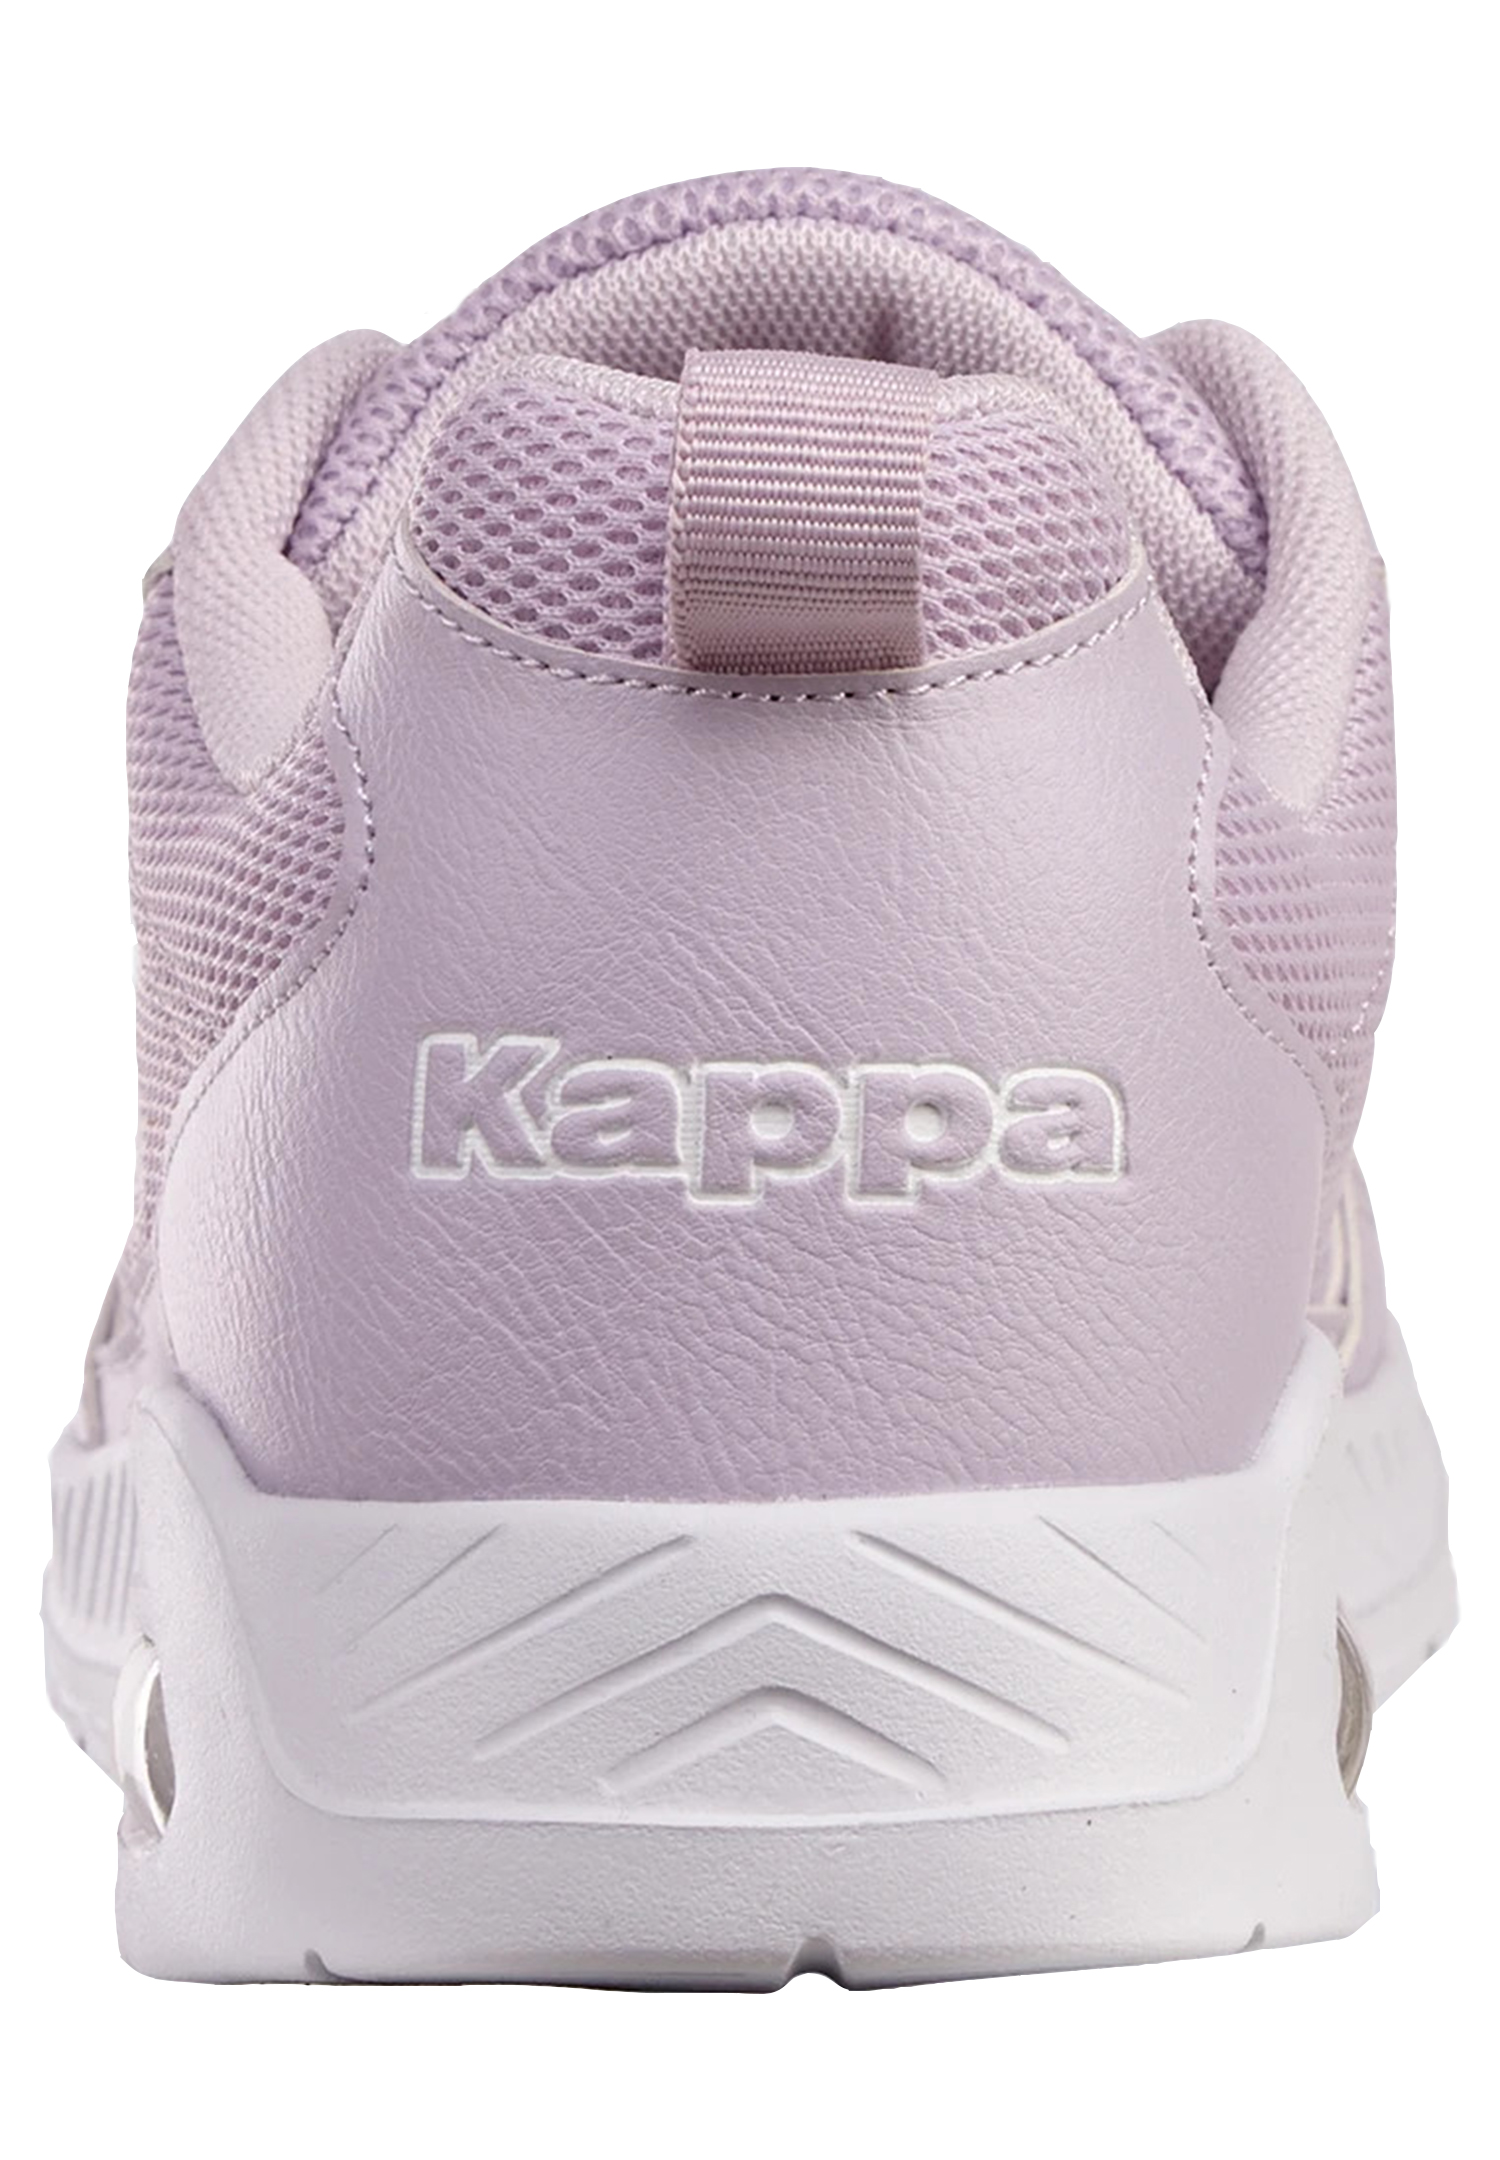 Kappa Sneaker Unisex Turnschuhe Schuhe 243395 2410 Flieder 